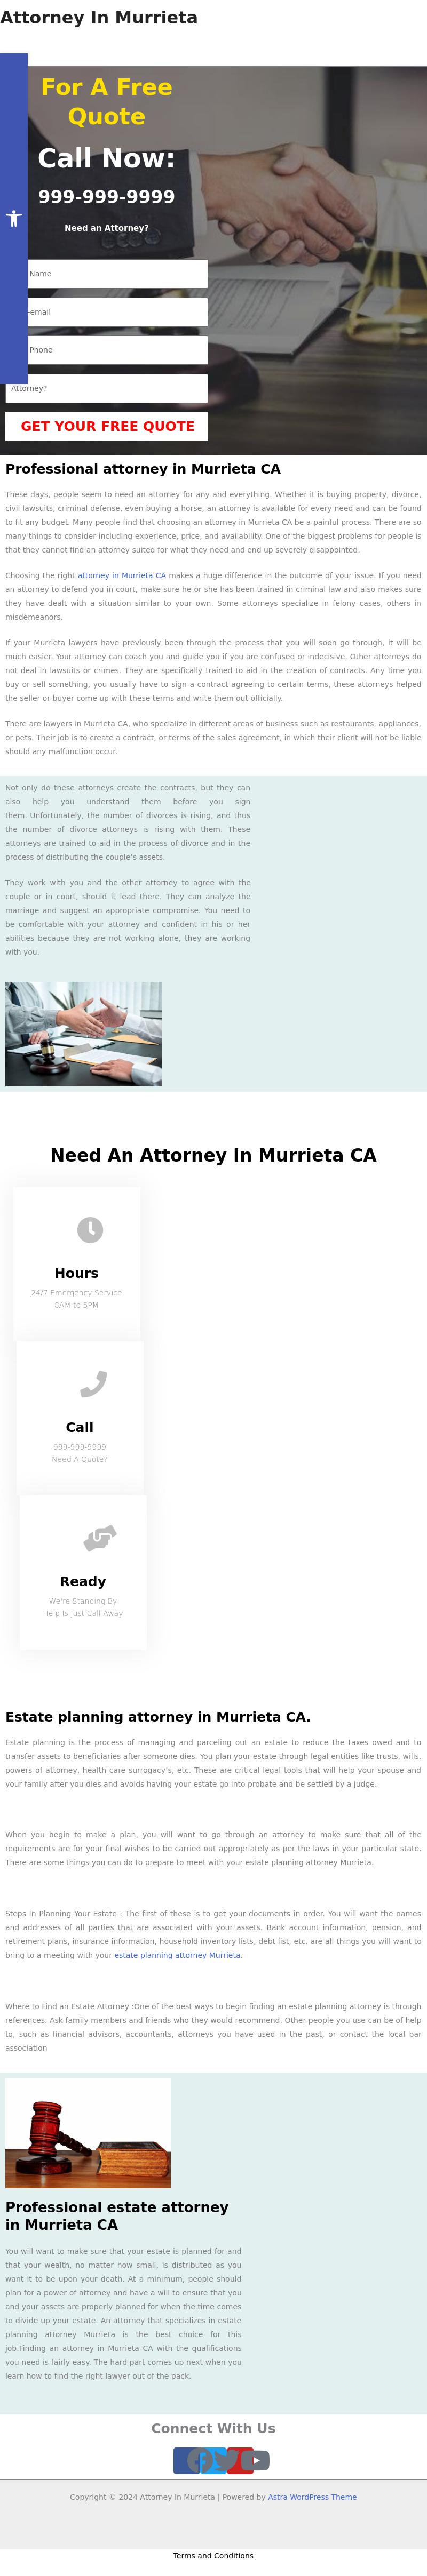 Attorney In Murrieta - Murrieta CA Lawyers